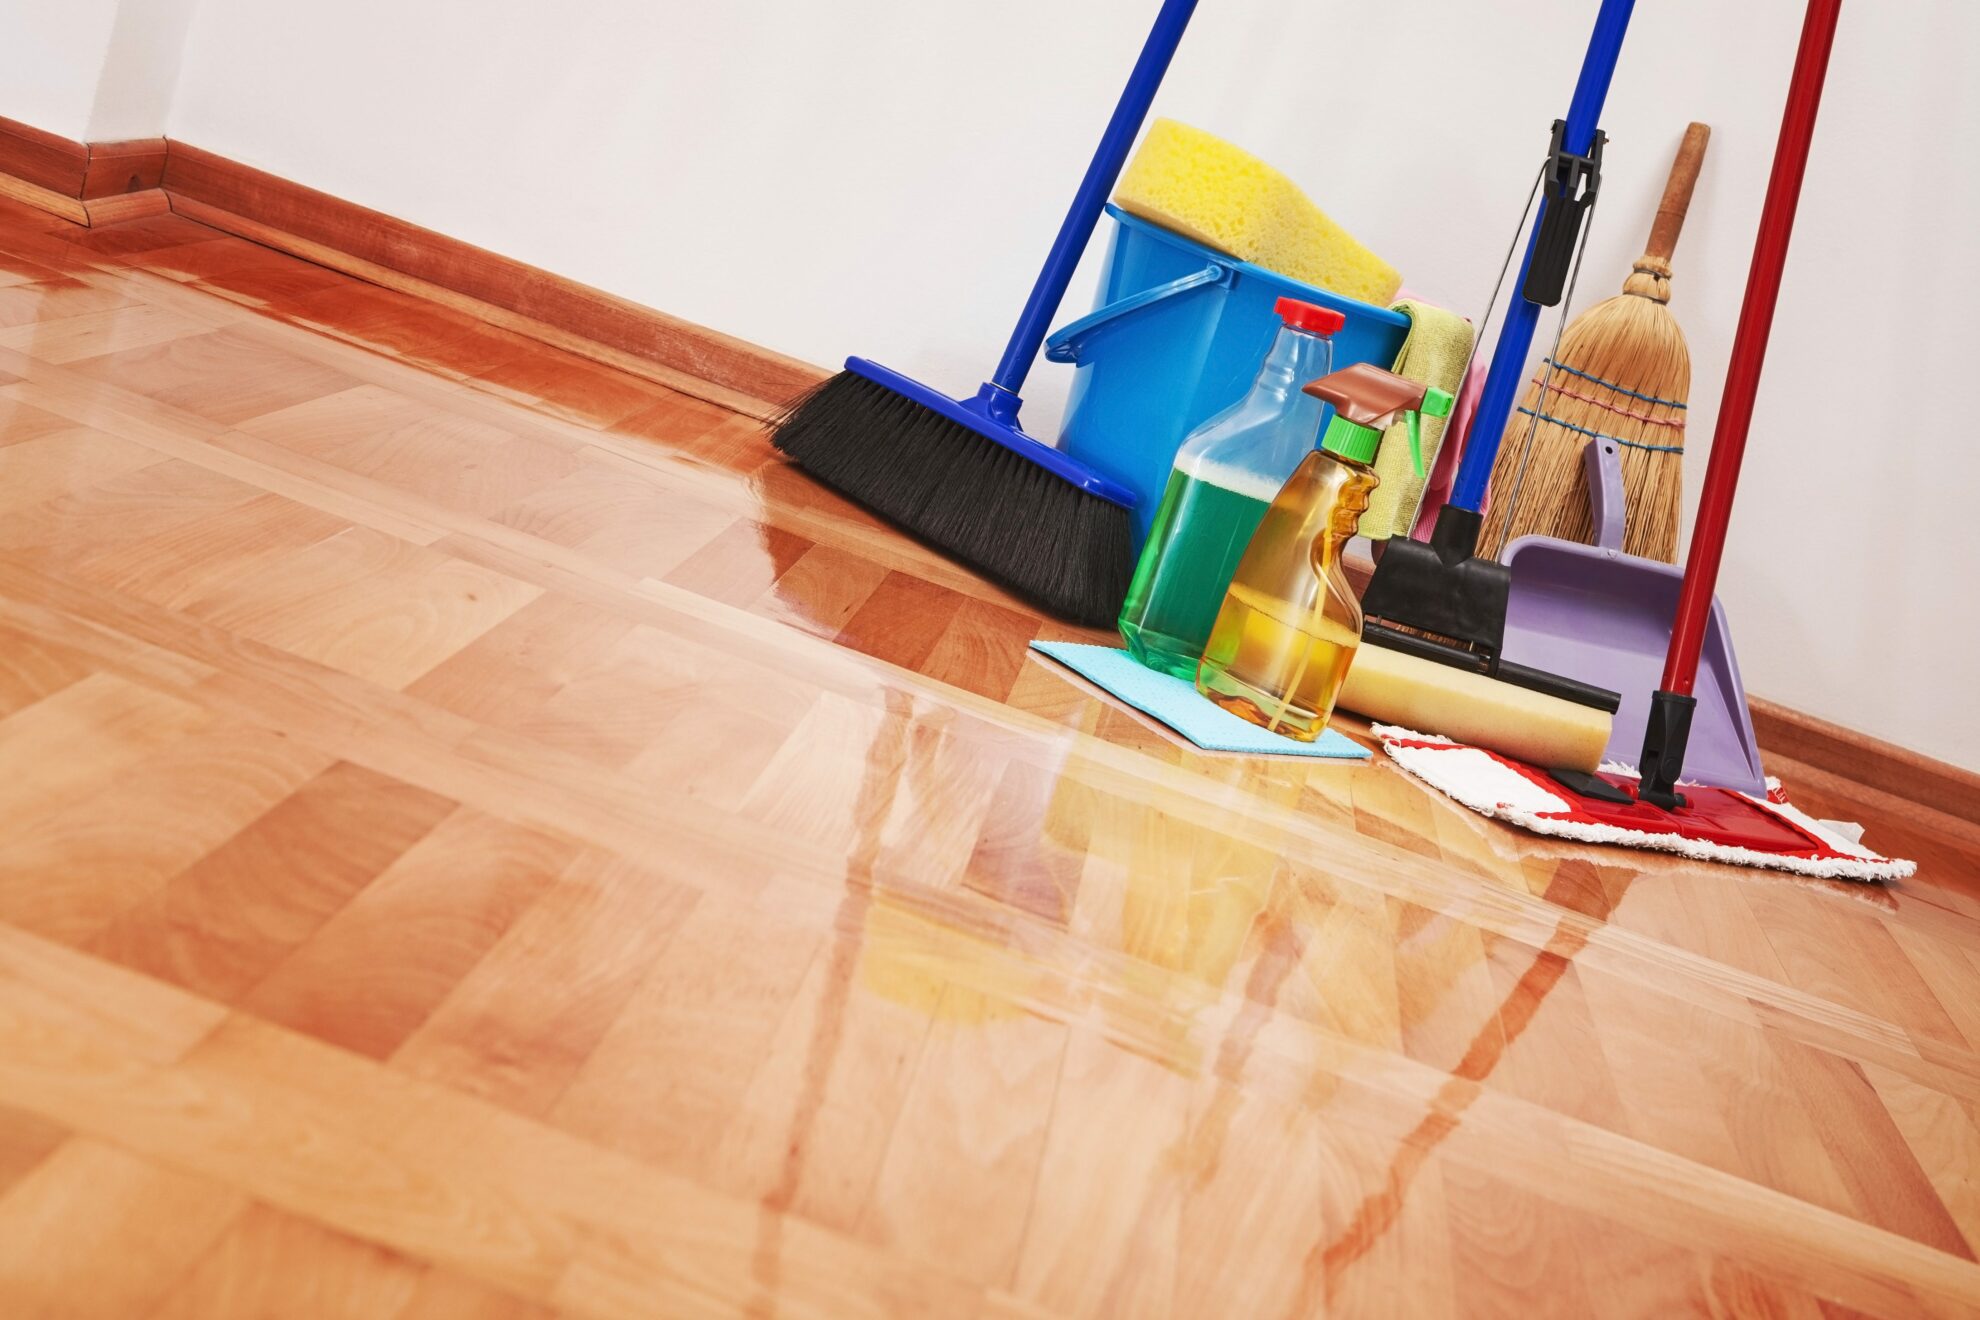 cleaning hardwood floors